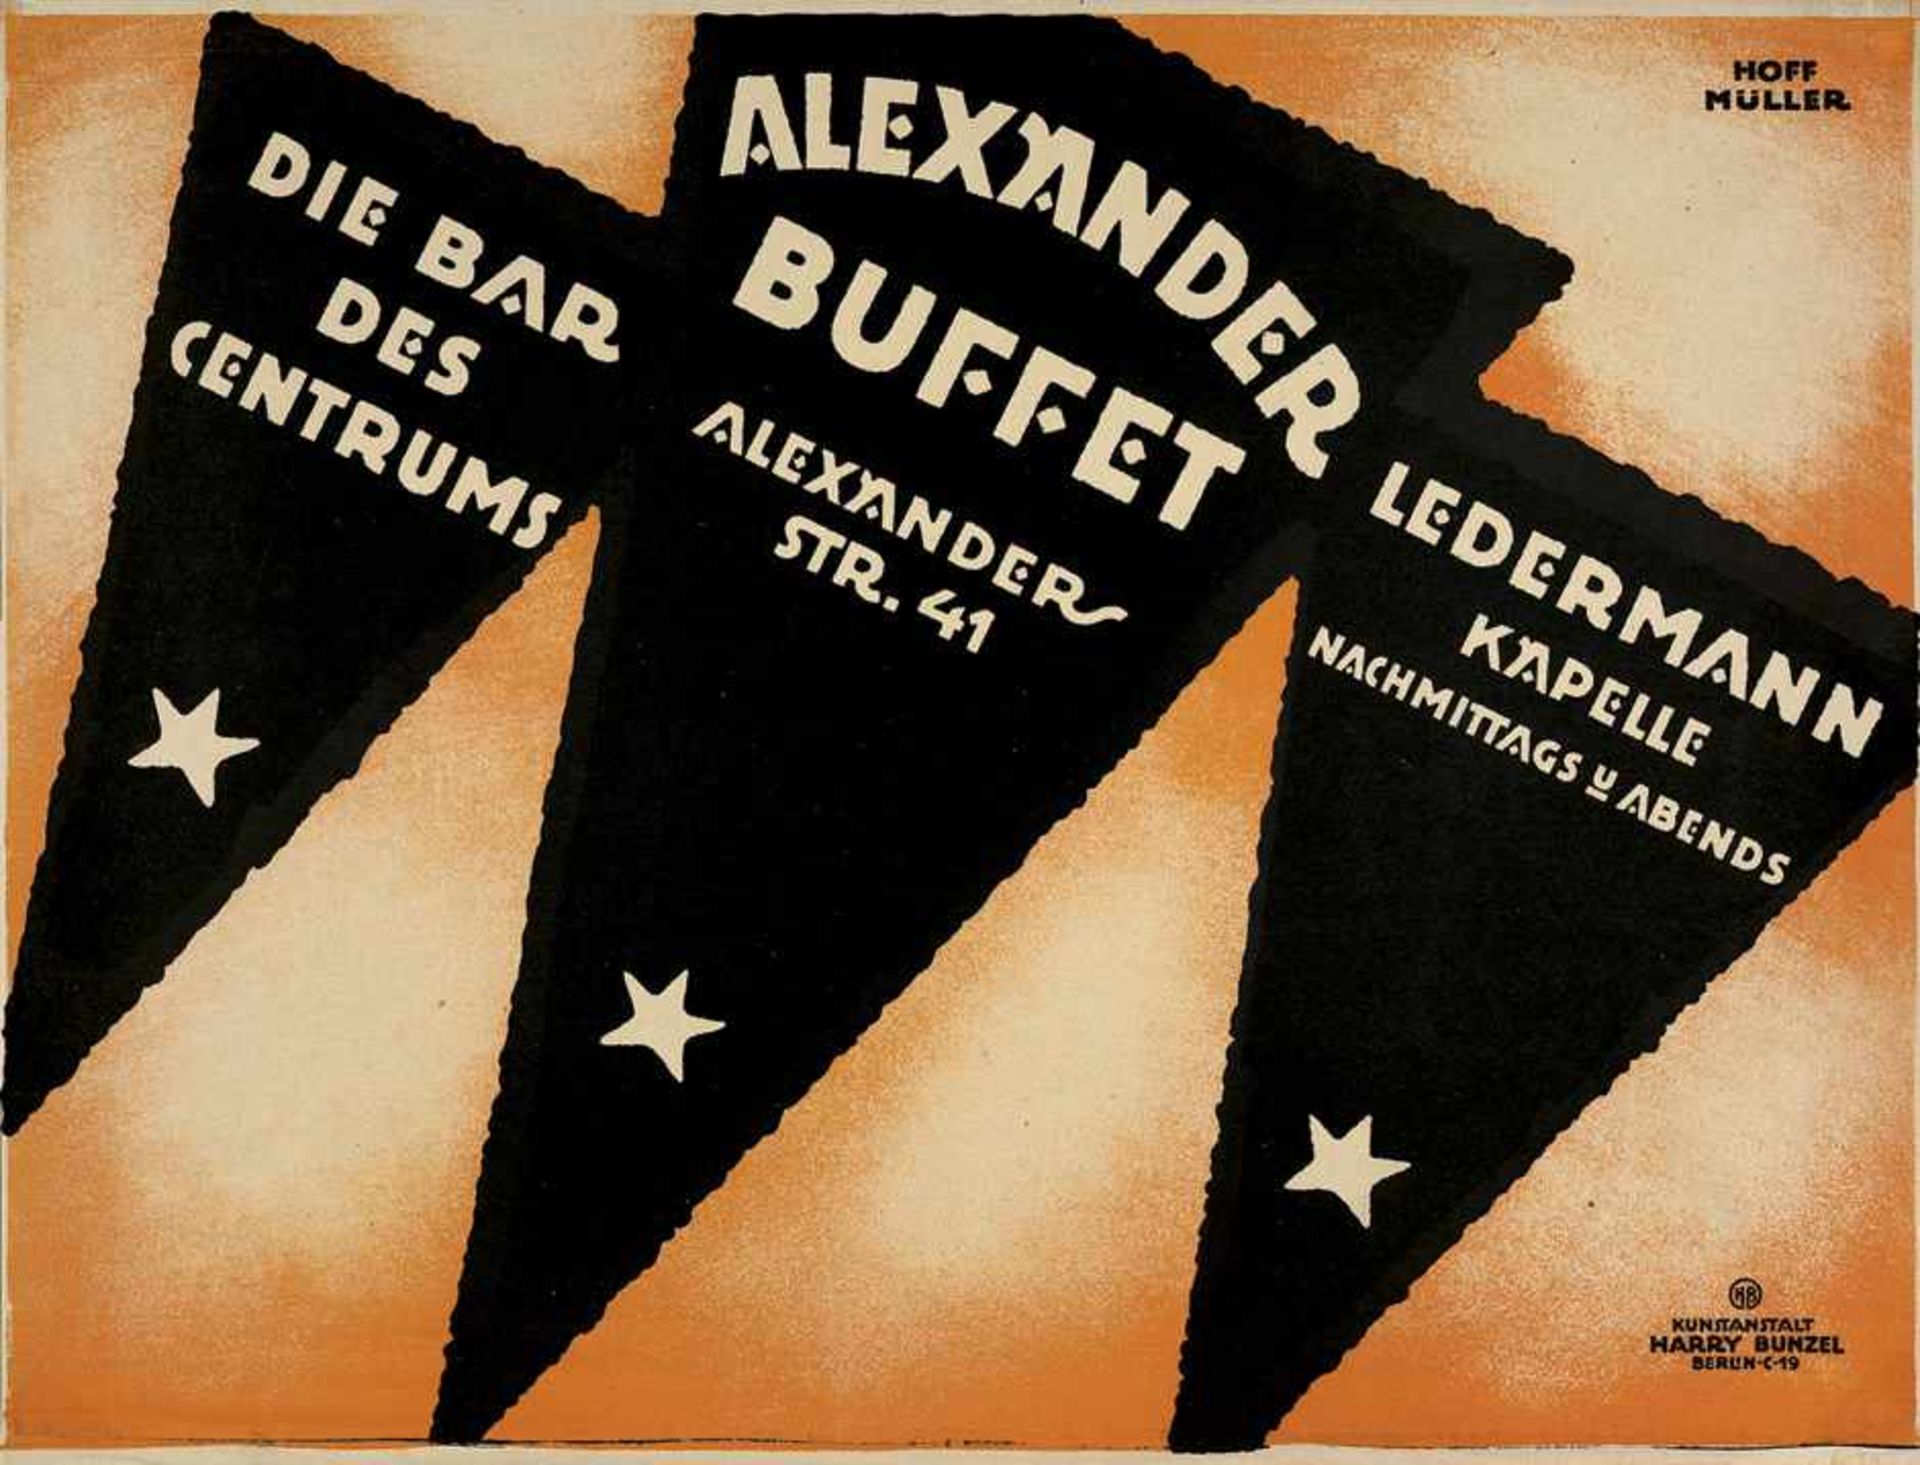 Hoffmüller, Reinhard: Alexander BuffetHoffmüller, Reinhard. Alexander Buffet. Die Bar des